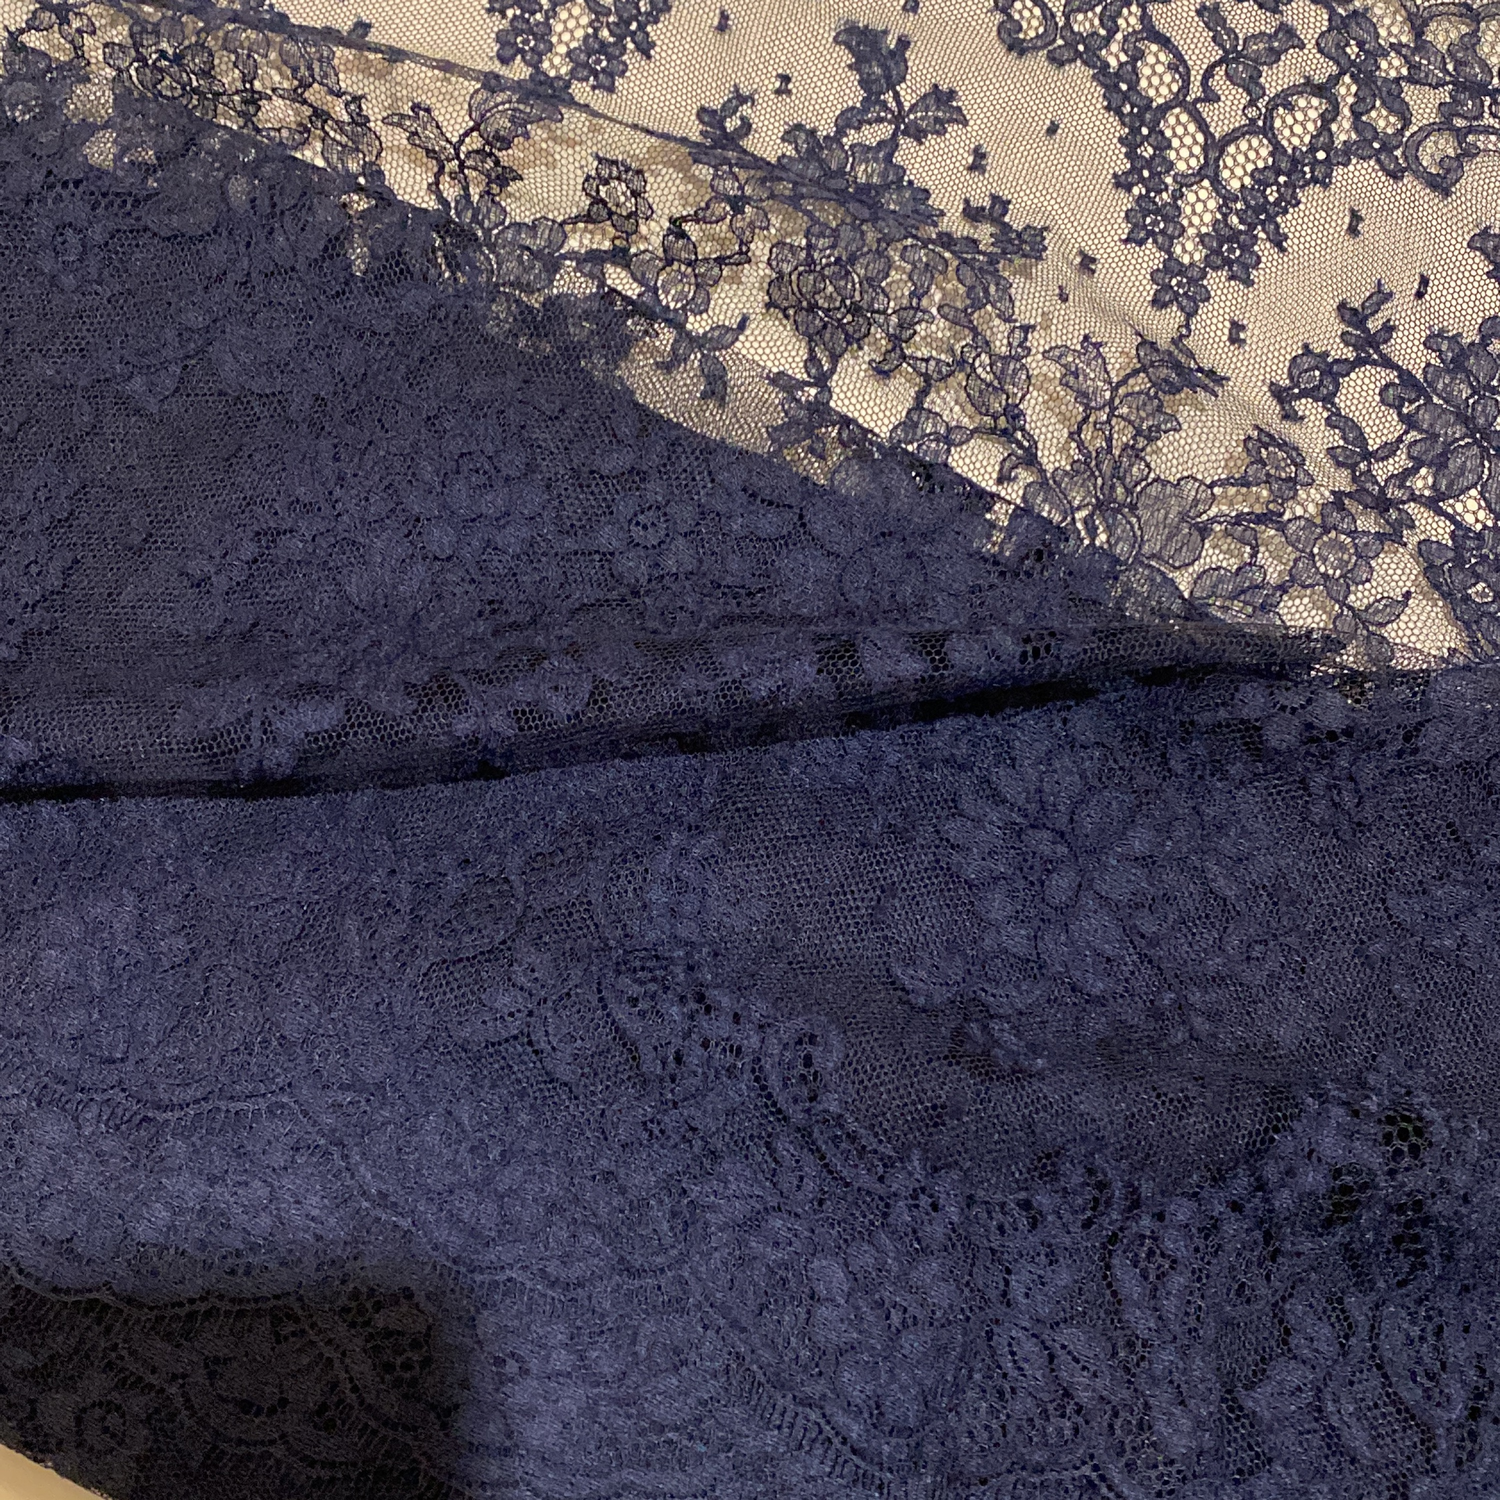 Фото №1 к отзыву покупателя Елена о товаре Французский гипюр Шантильи темно синий цвет